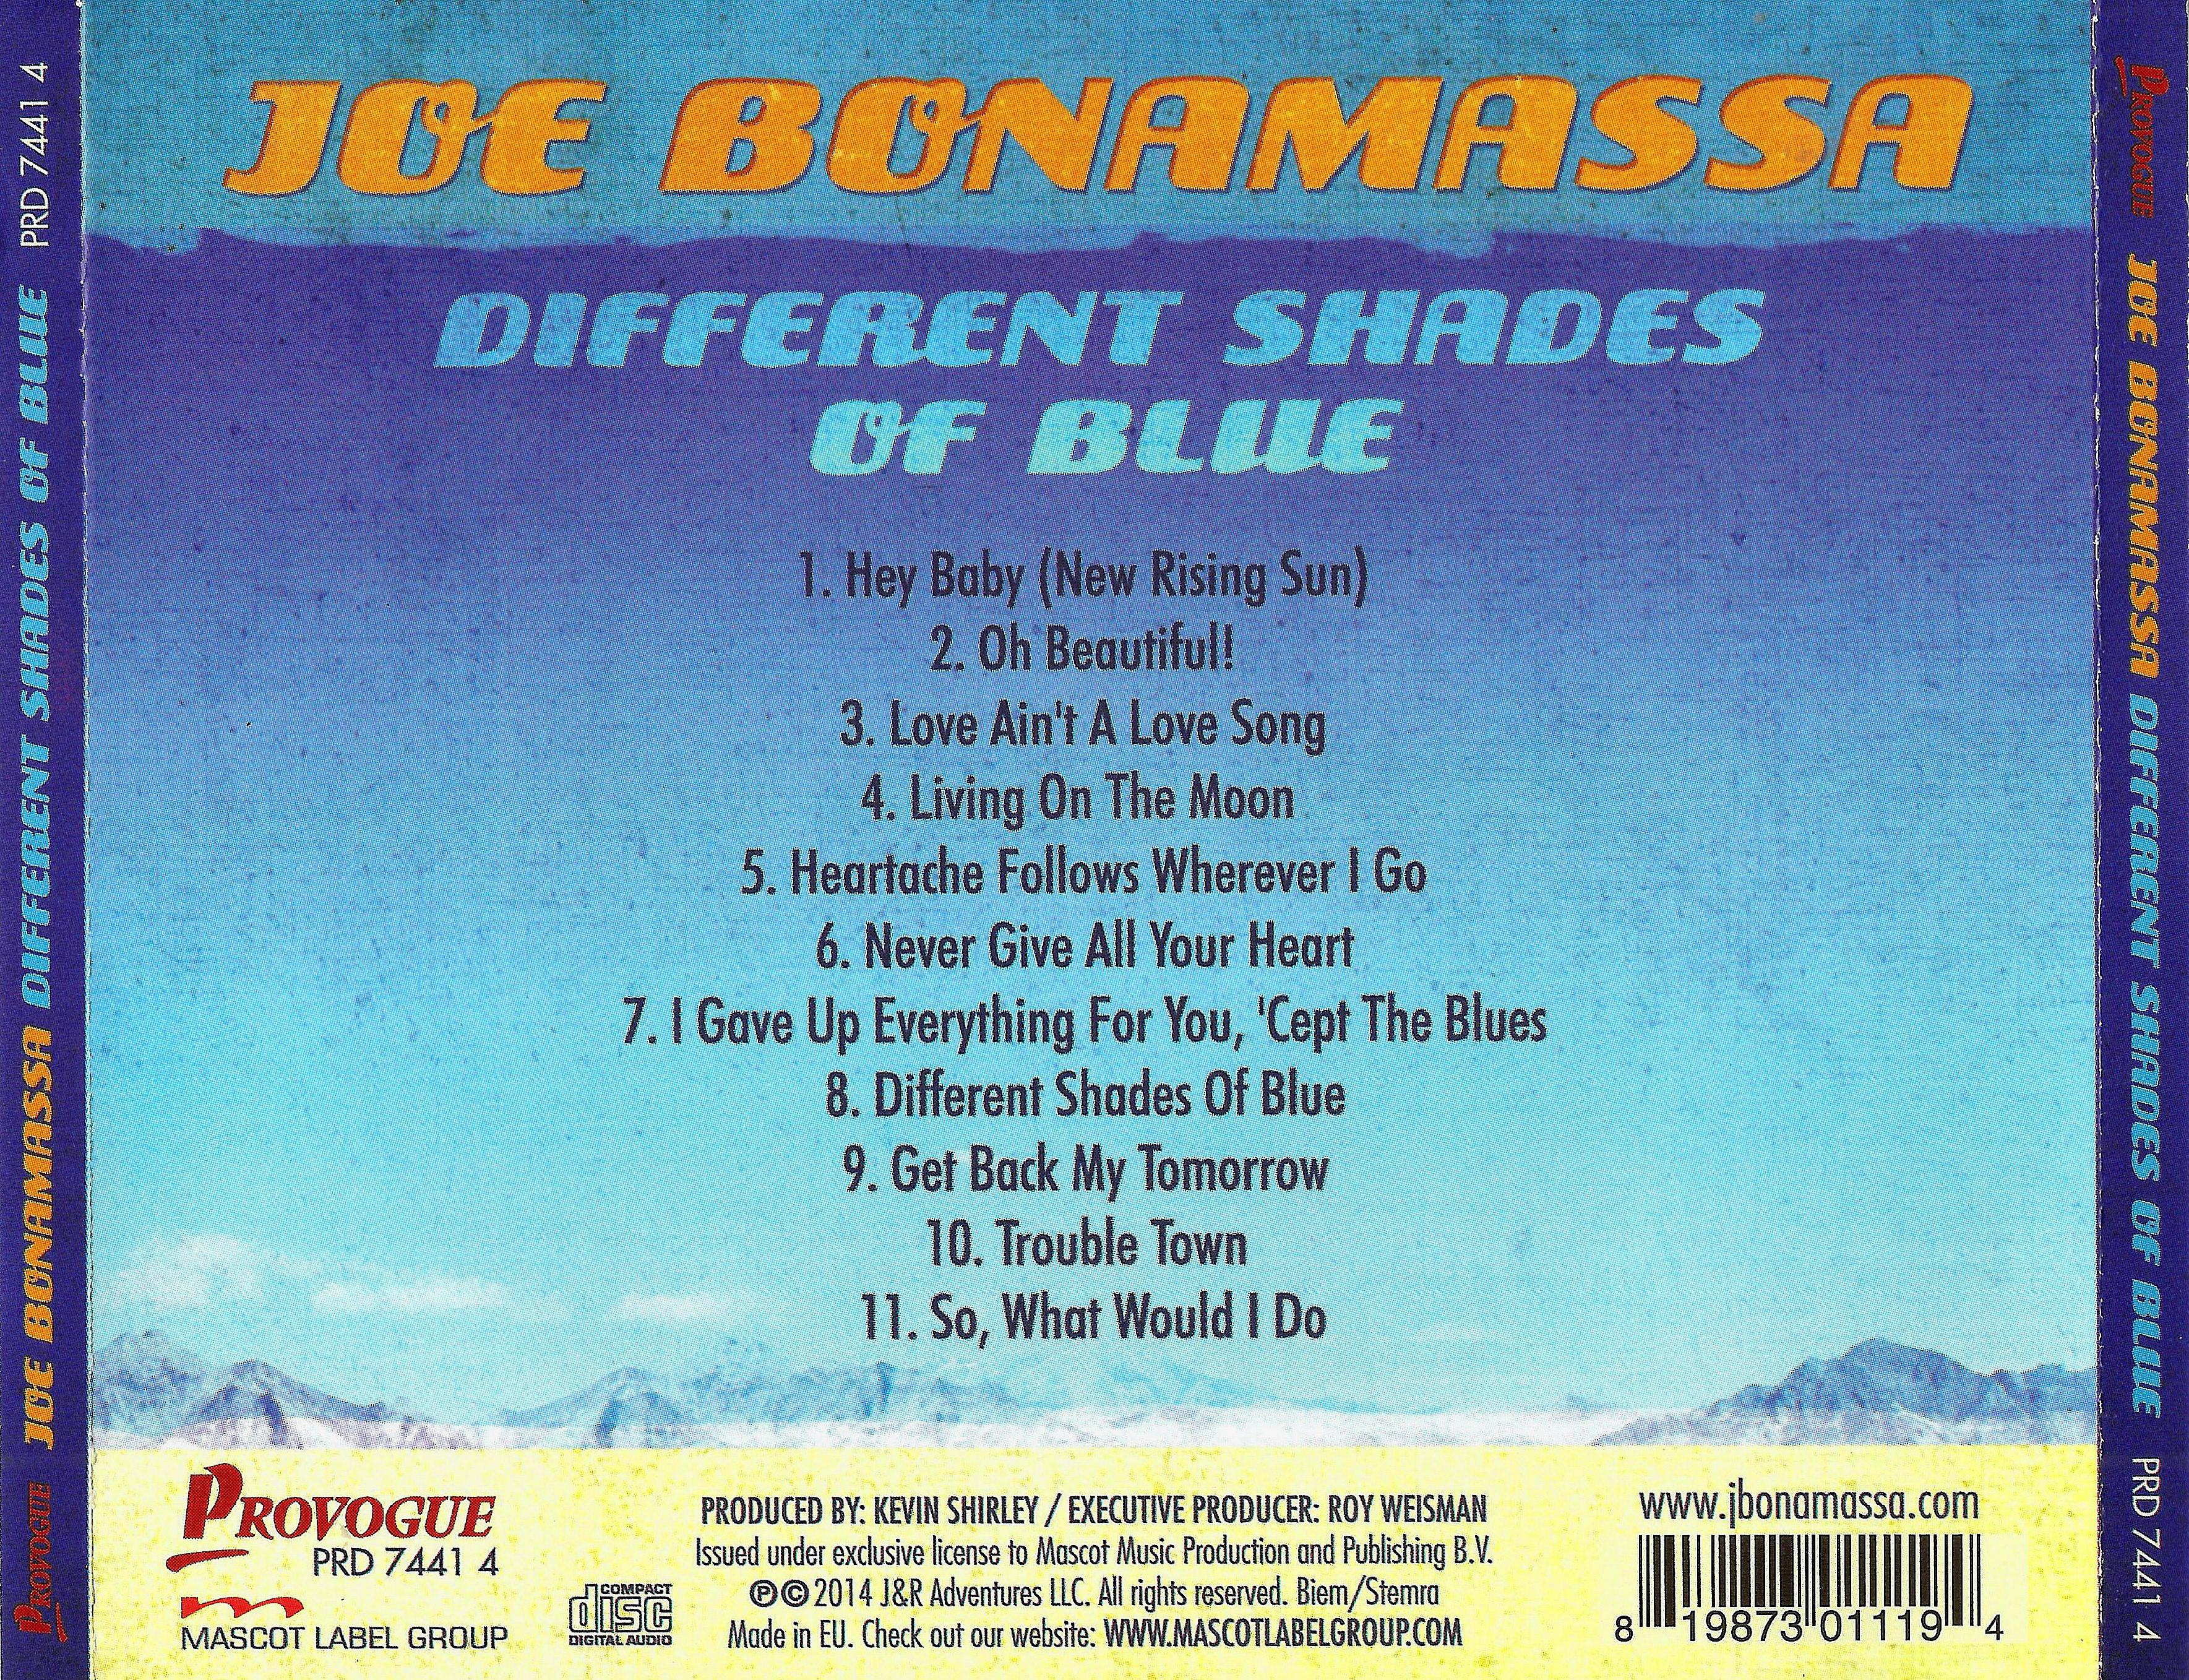 Different kind песня перевод. Different Shades of Blue (2014). Joe Bonamassa different Shades of Blue. Different Shades of Blue Джо Бонамасса. Joe Bonamassa 2014.